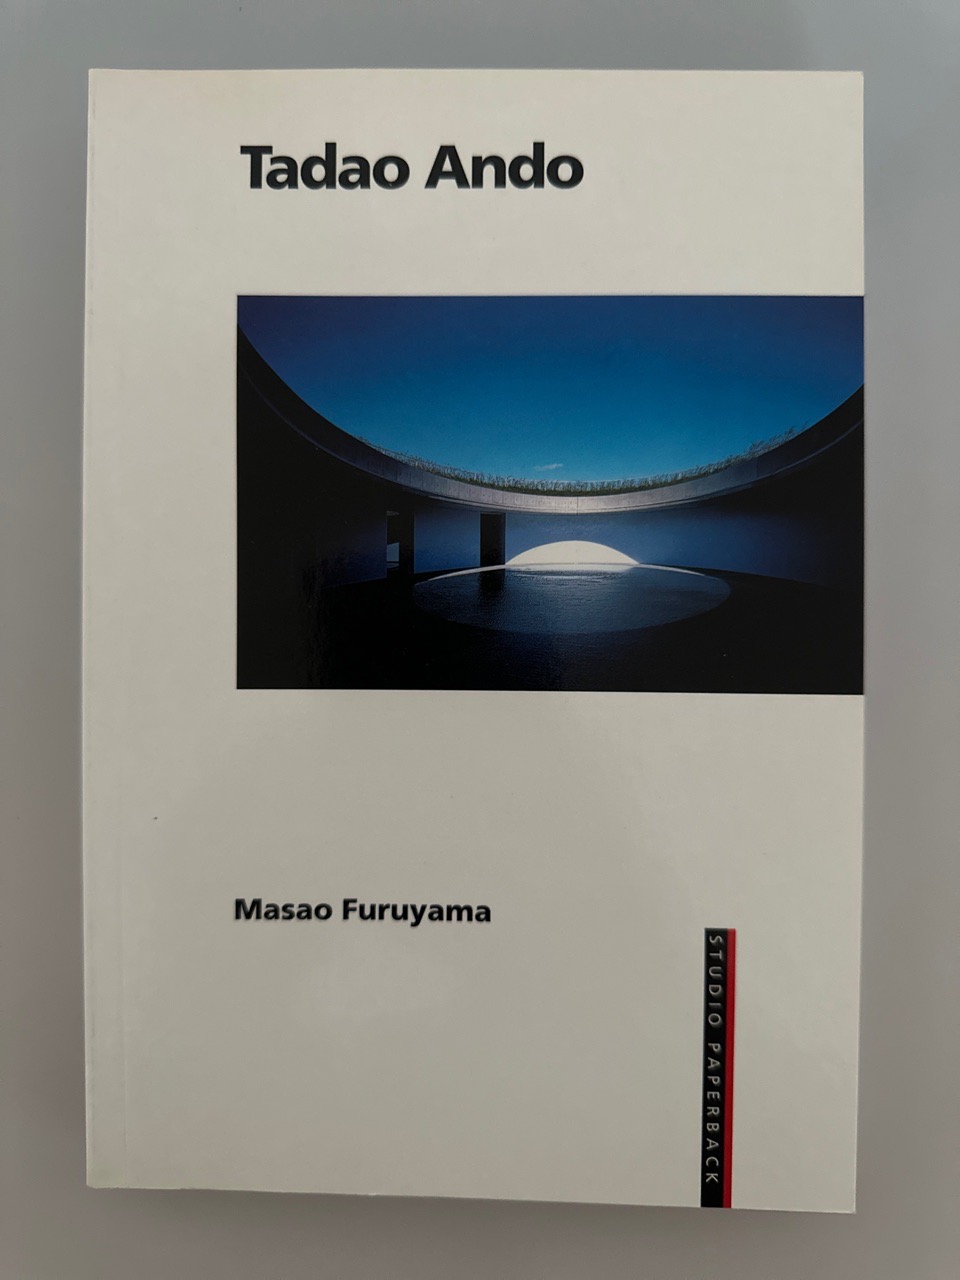 Tadao Ando (Studio Paperback) - Furuyama, Masao